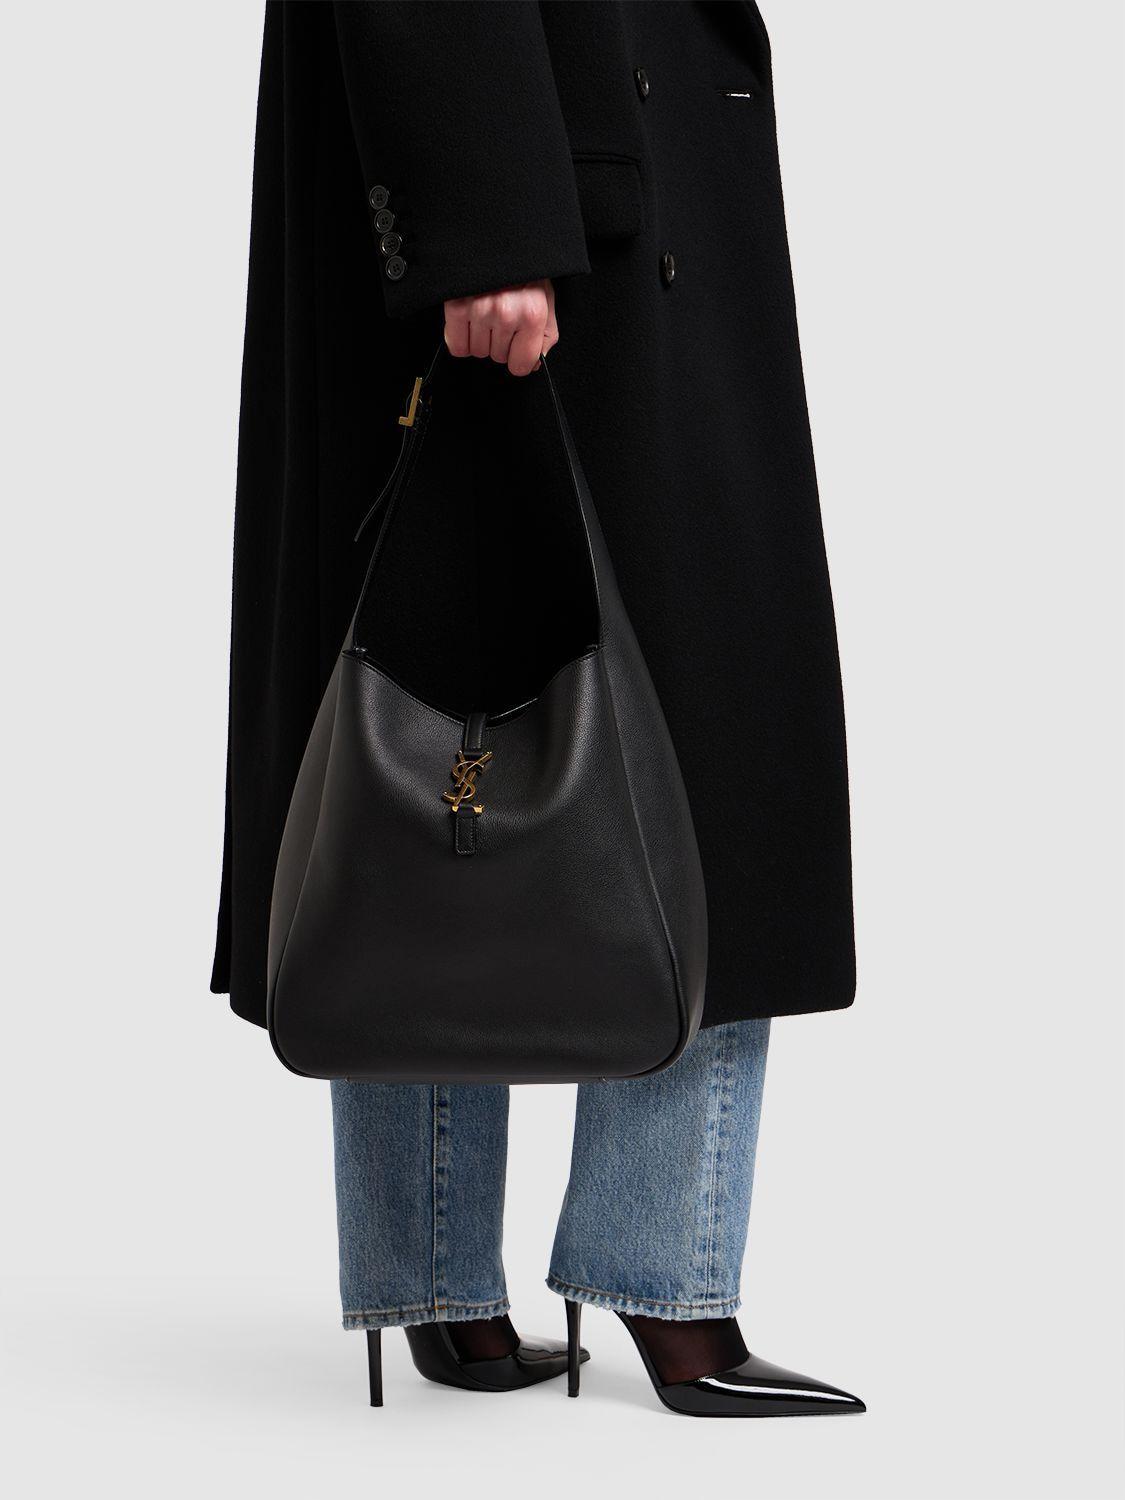 Le 5 A 7 Large Leather Tote Bag in Black - Saint Laurent